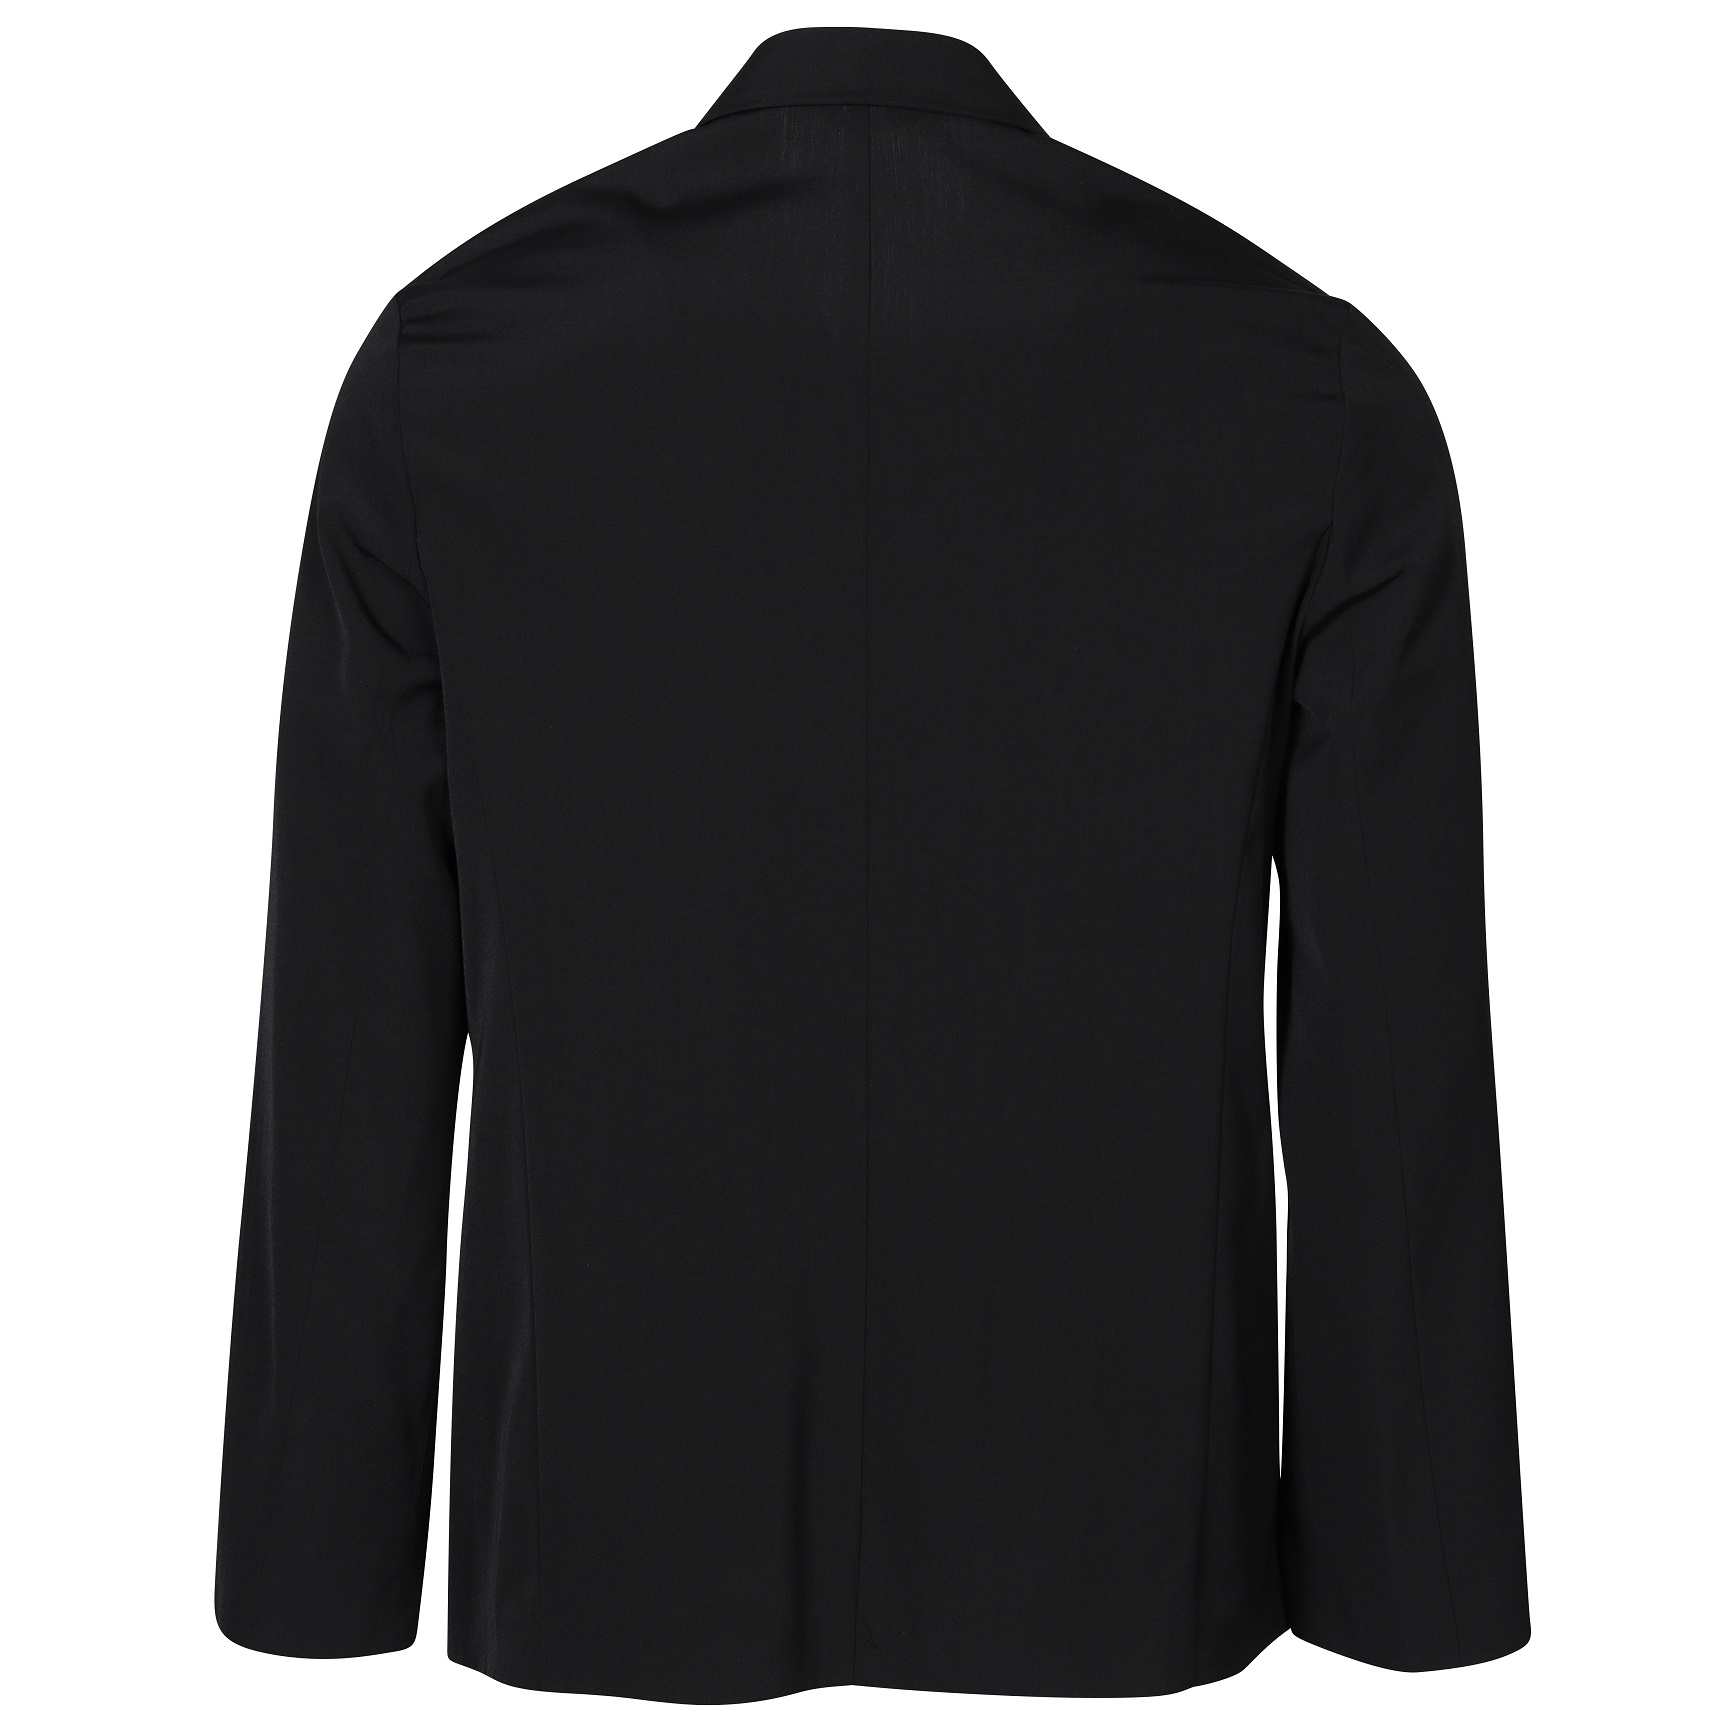 ACNE STUDIOS Suit Jacket in Black